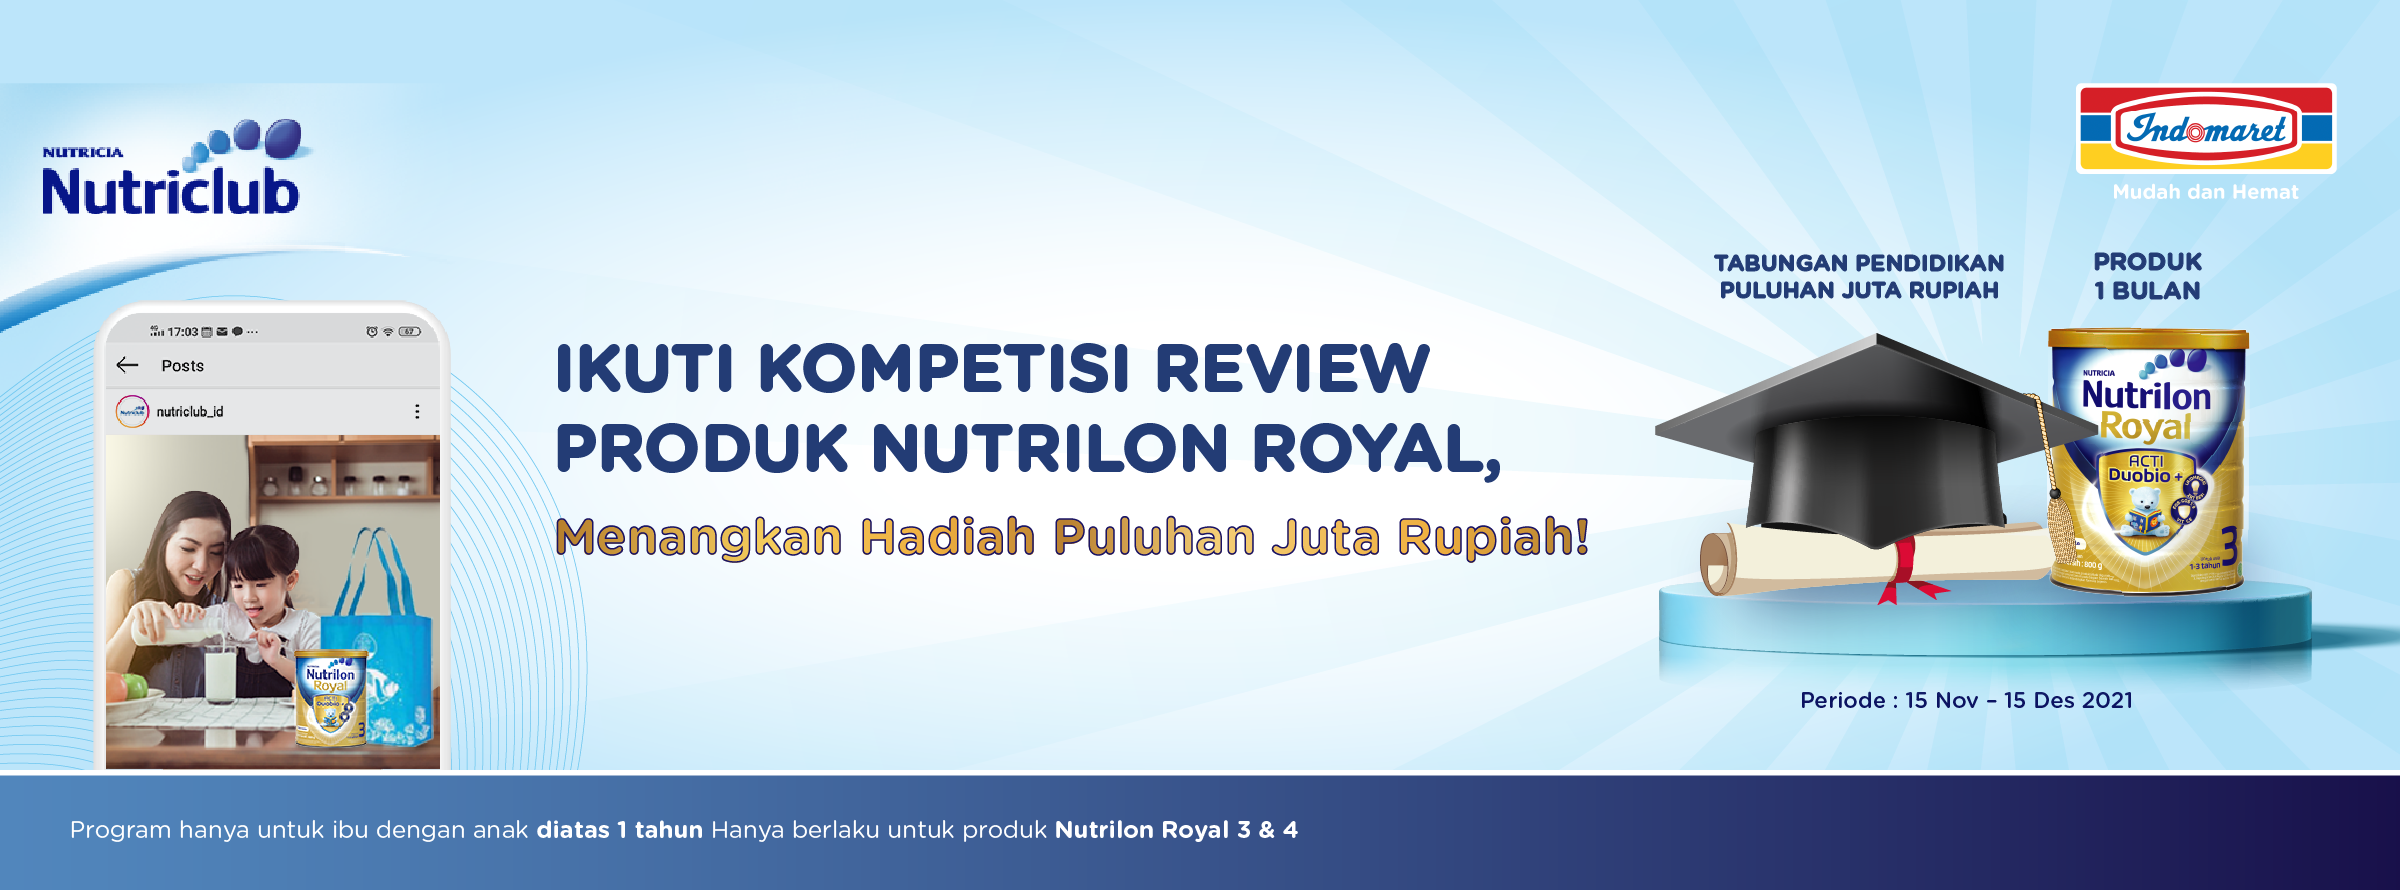 Nutrilon Royal: Program Kompetisi Review Produk